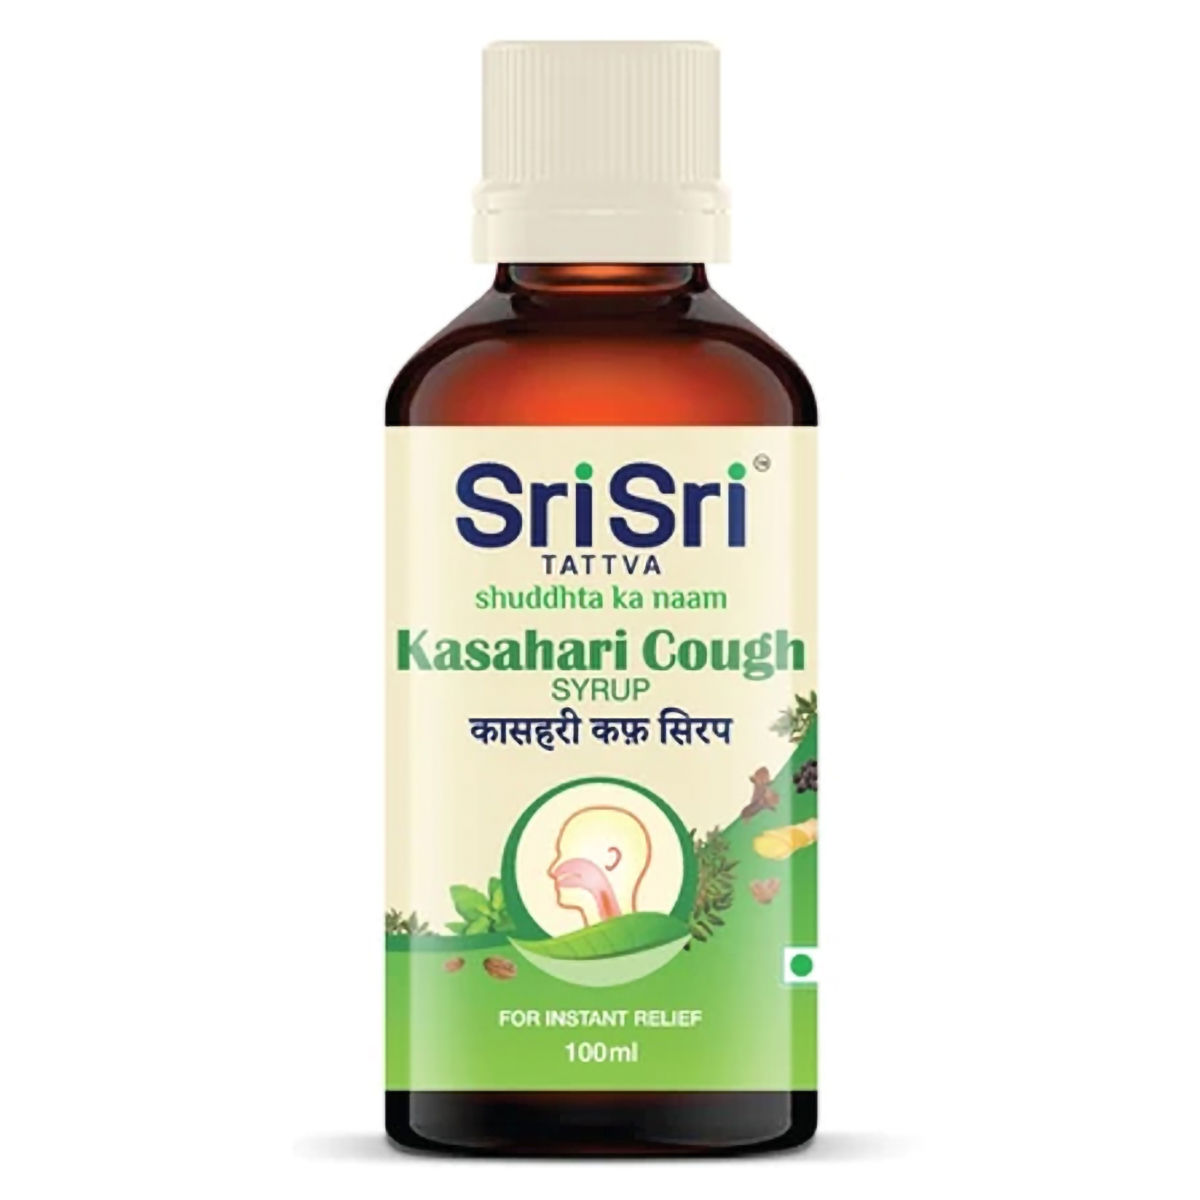 Buy Sri Sri Tattva Kasahari Cough Syrup, 100 ml Online